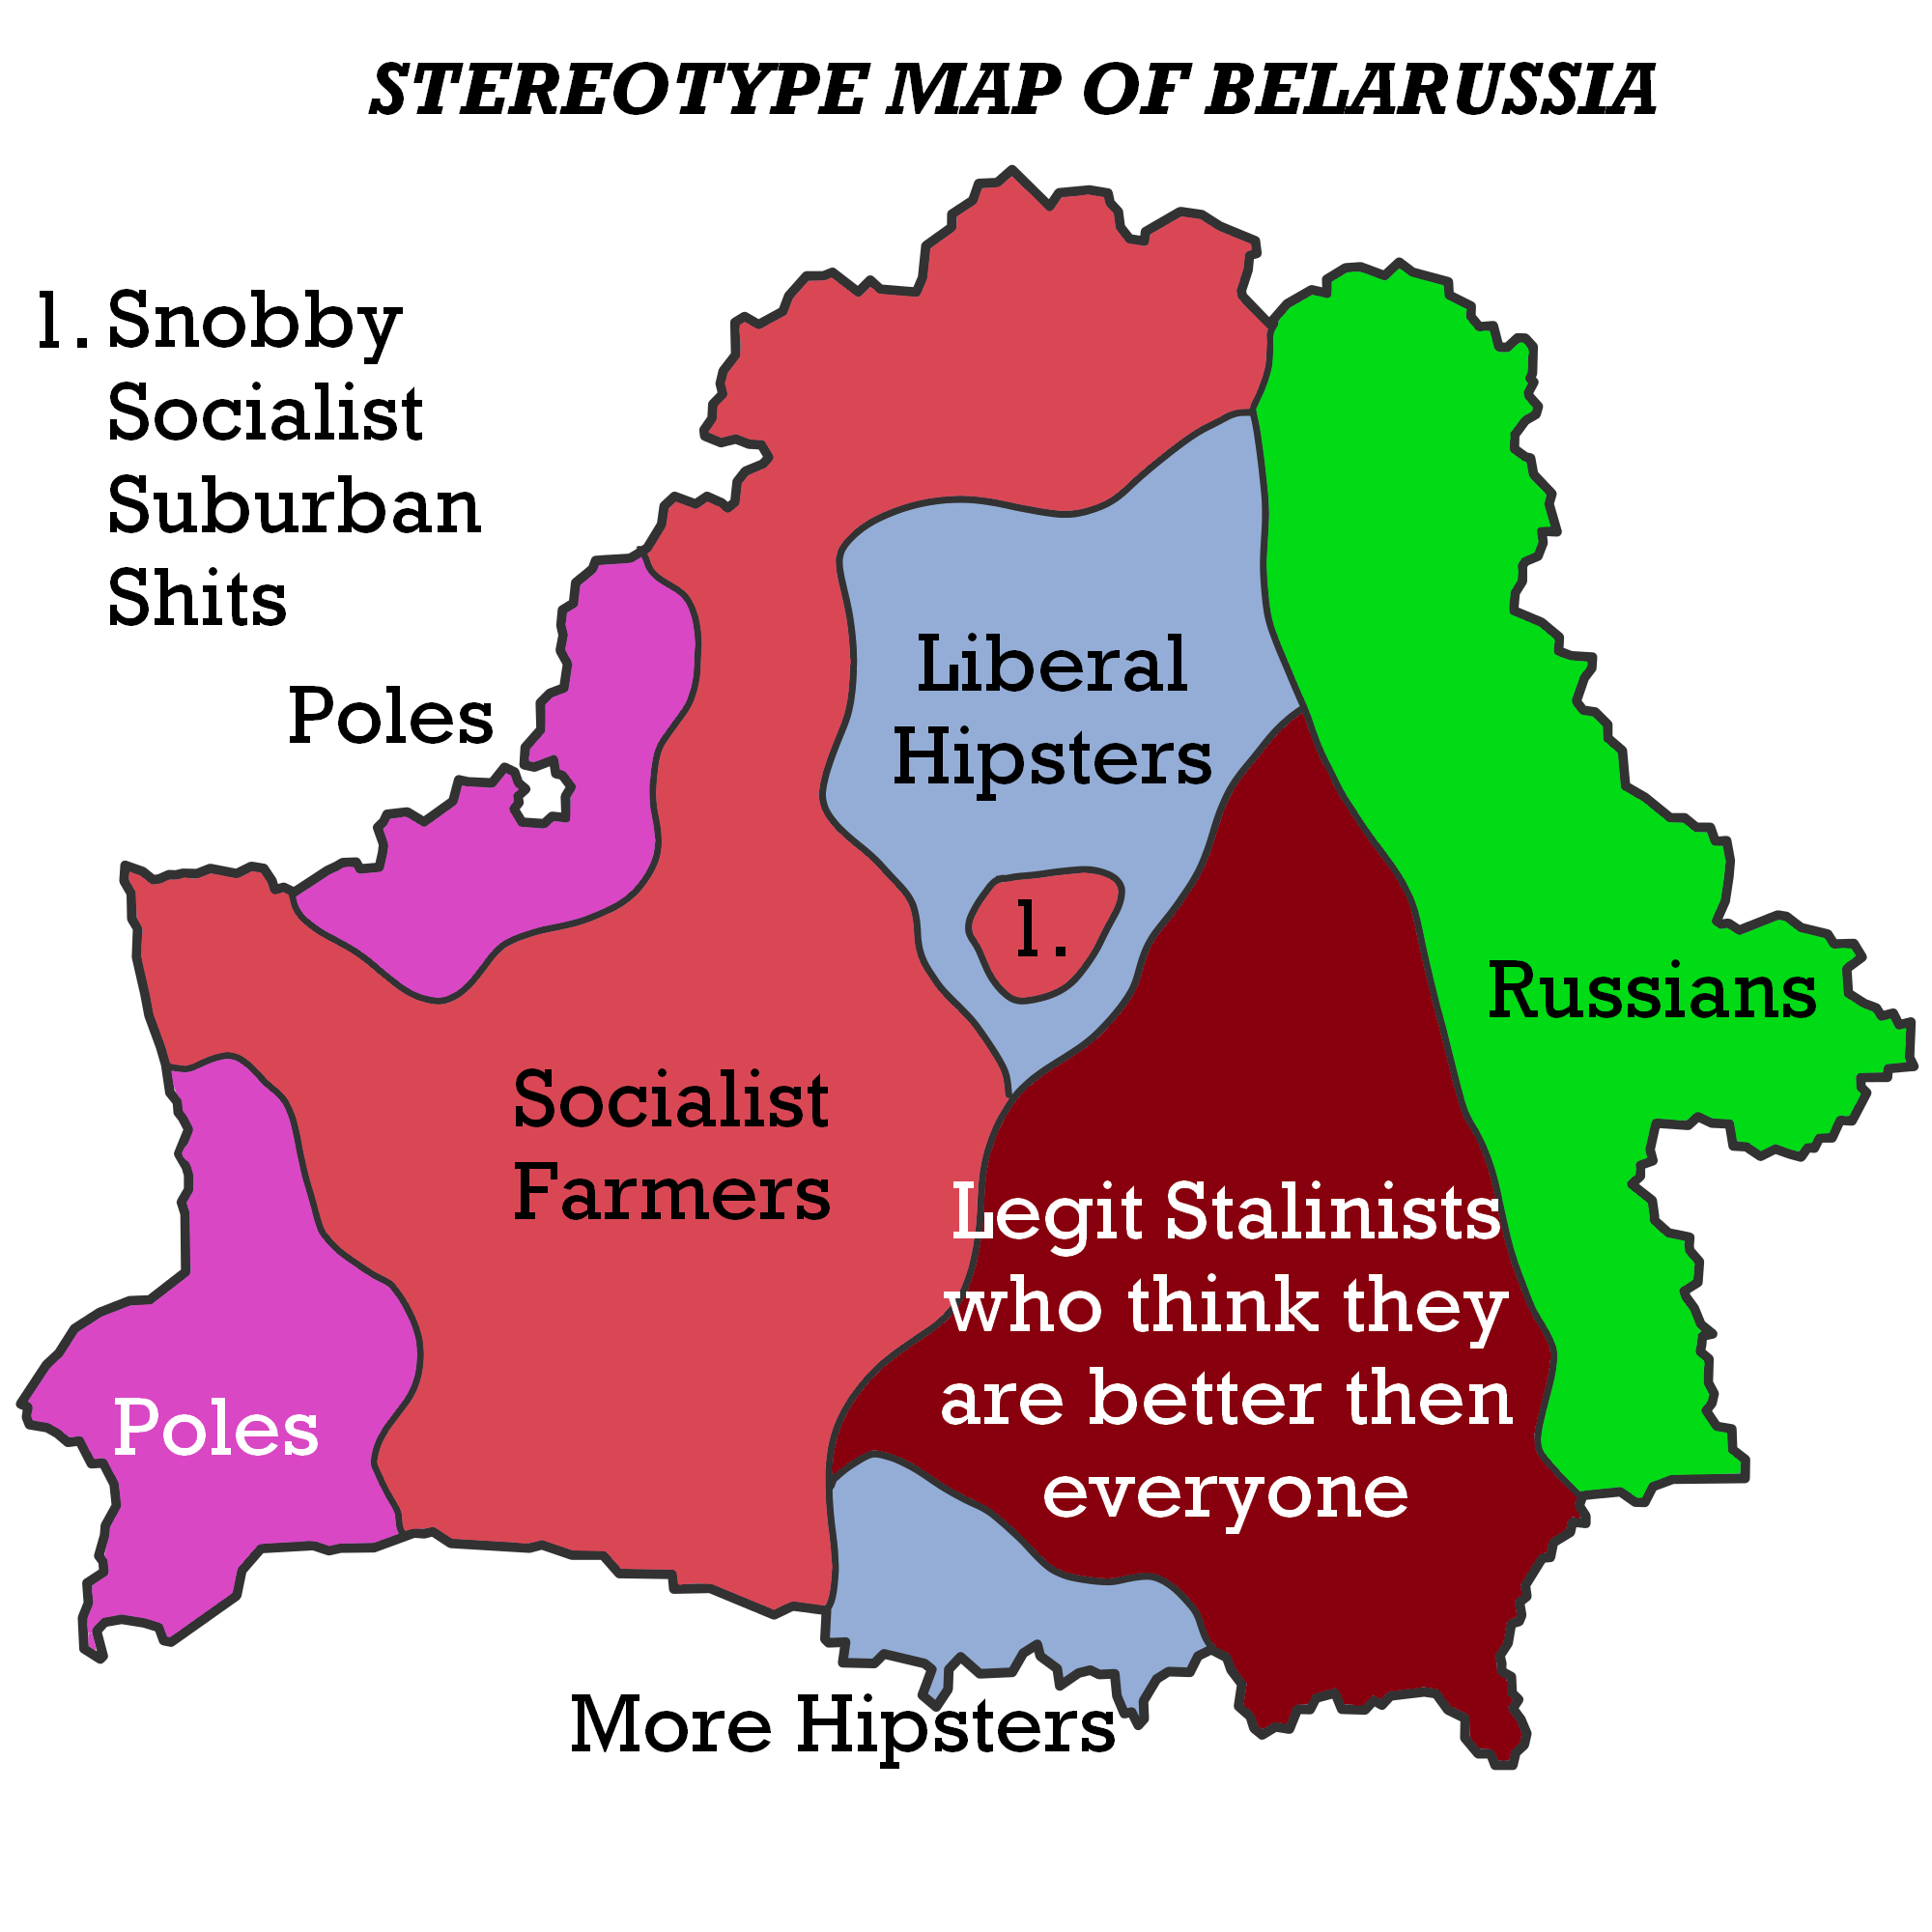 belarus_stereotype.png